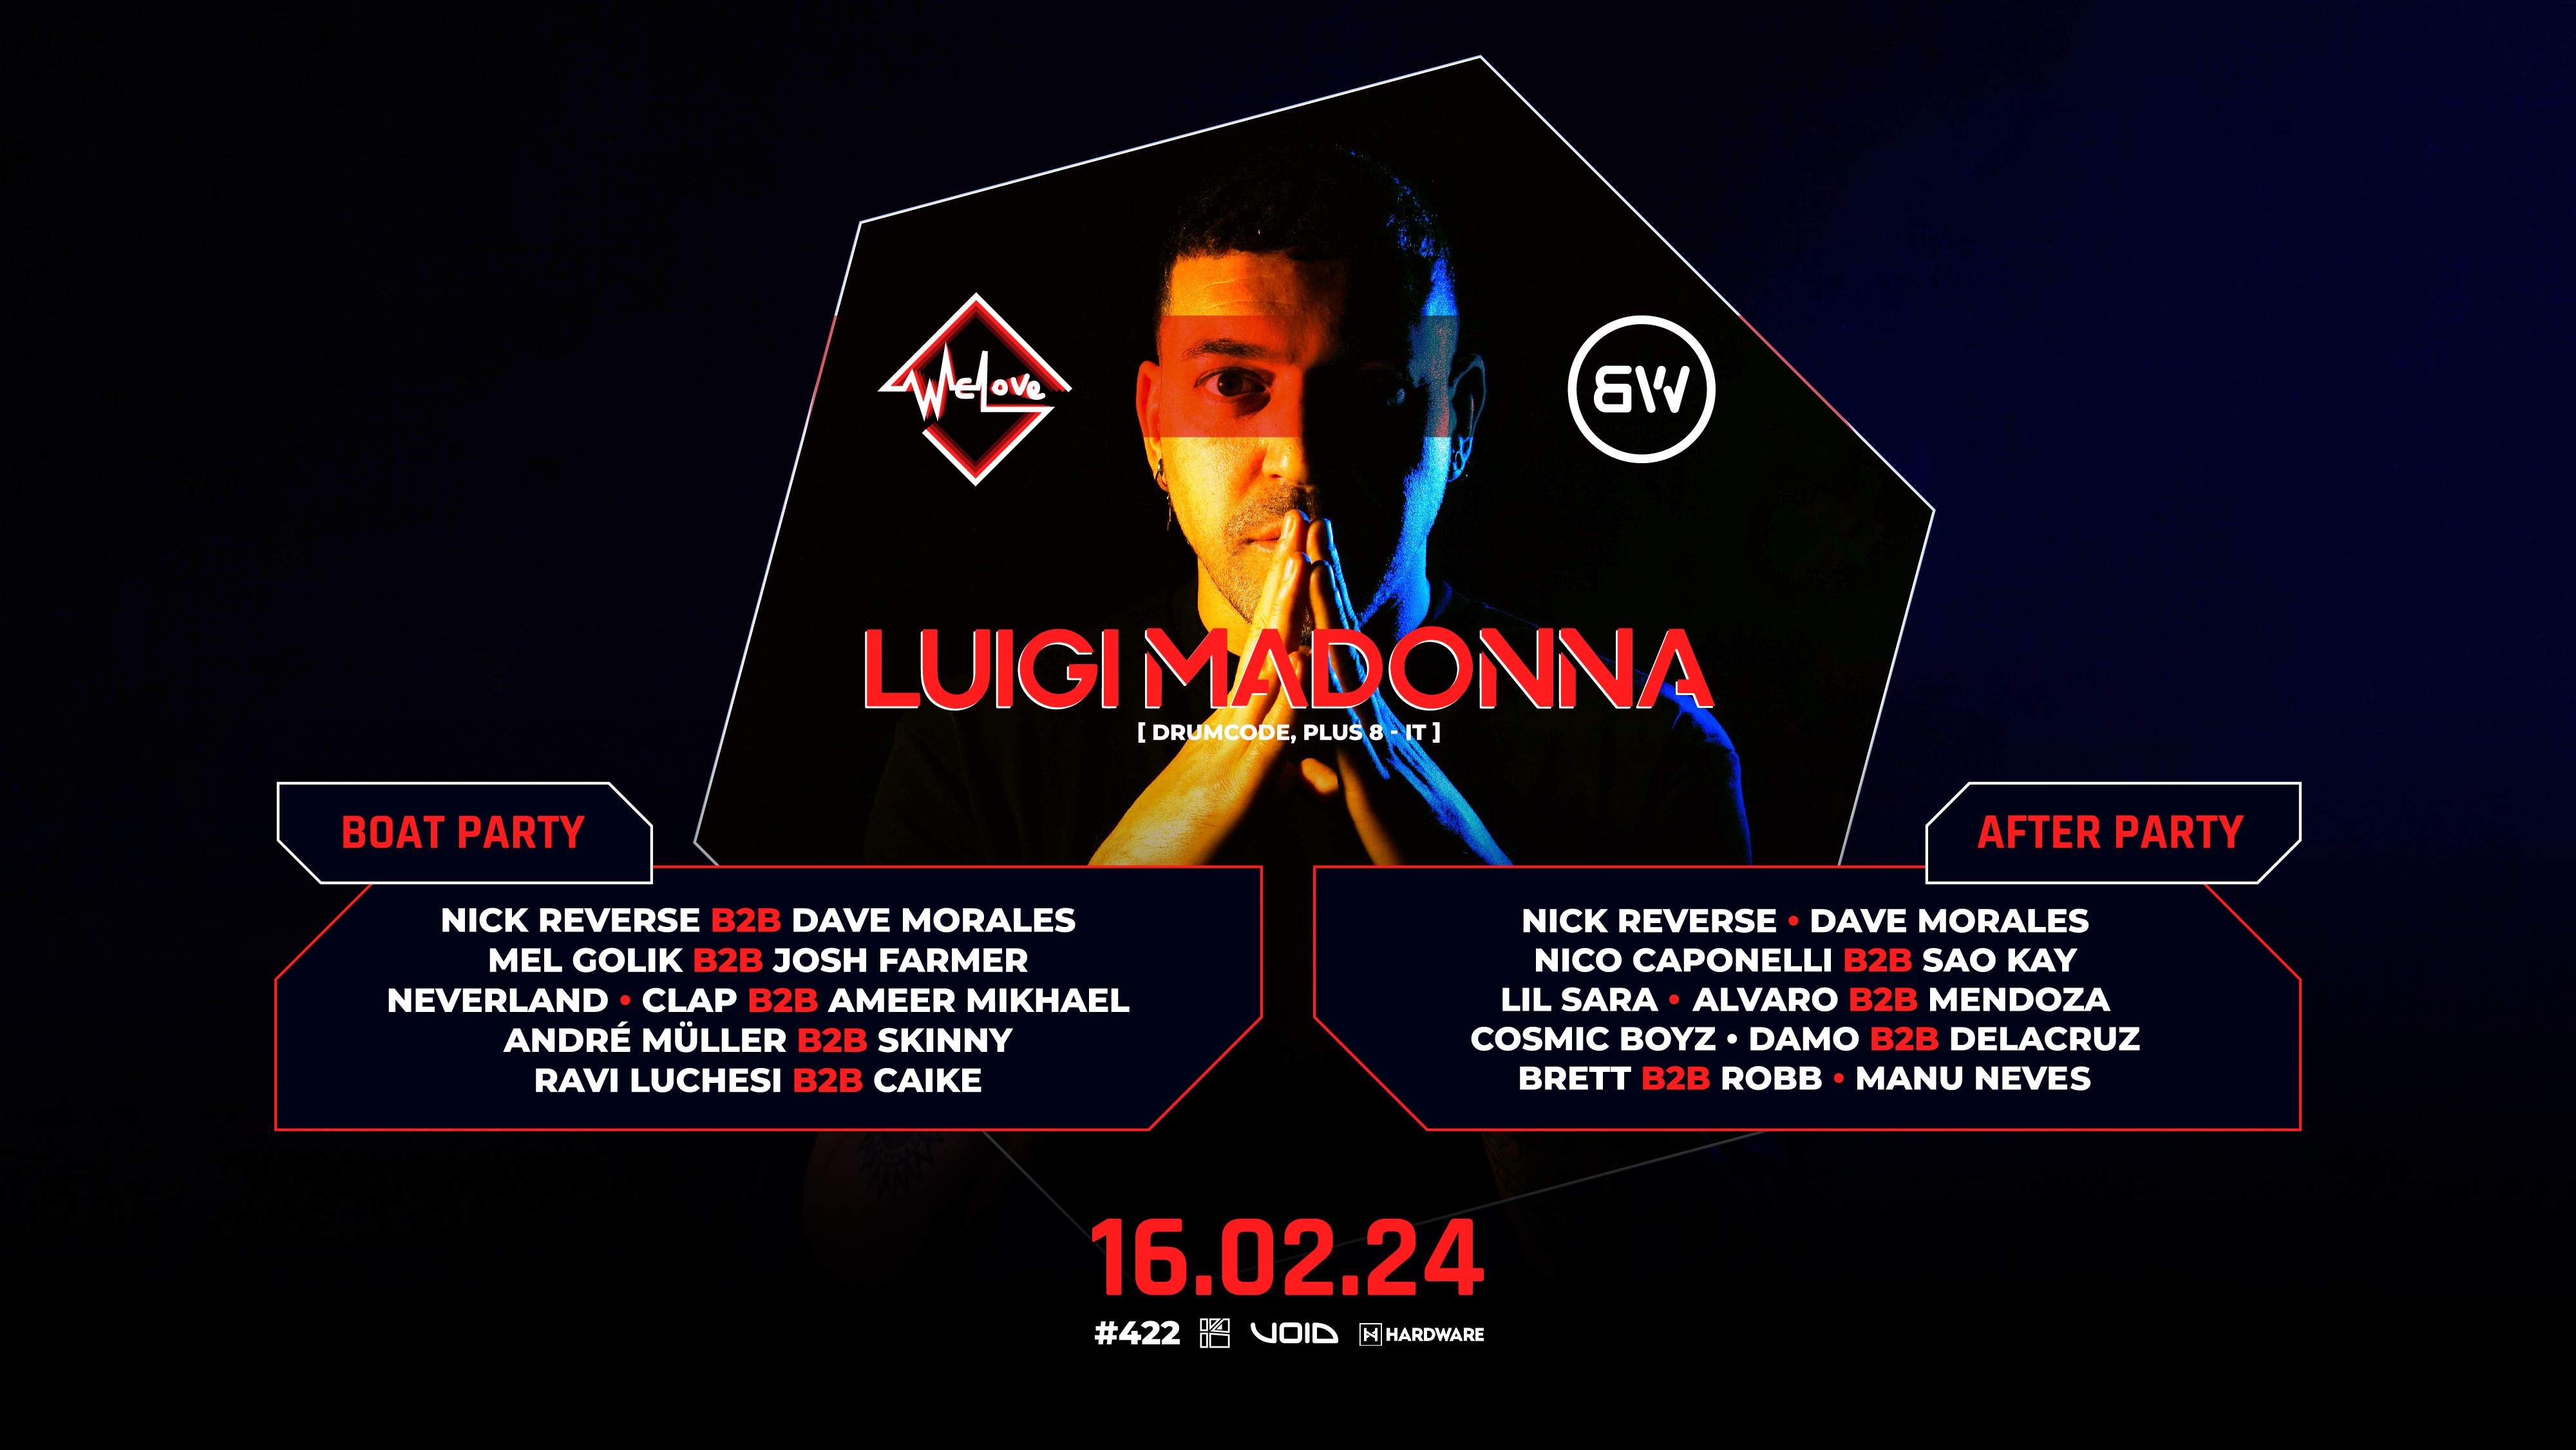 WeLove x Black&White - Luigi Madonna (Drumcode, Plus 8 - IT) - Página frontal